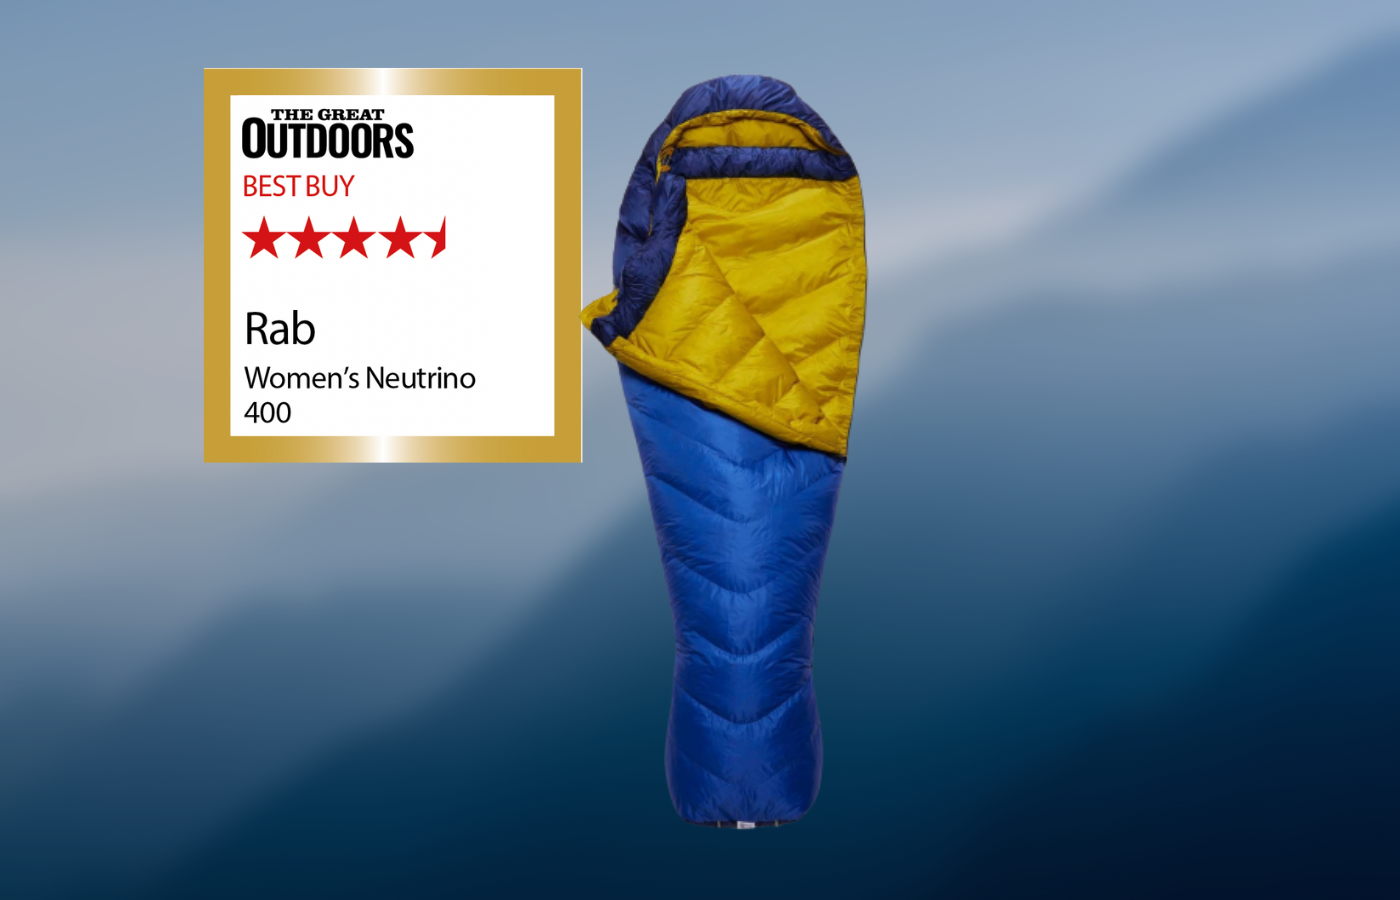 RAB 400 sleeping bag review and rating